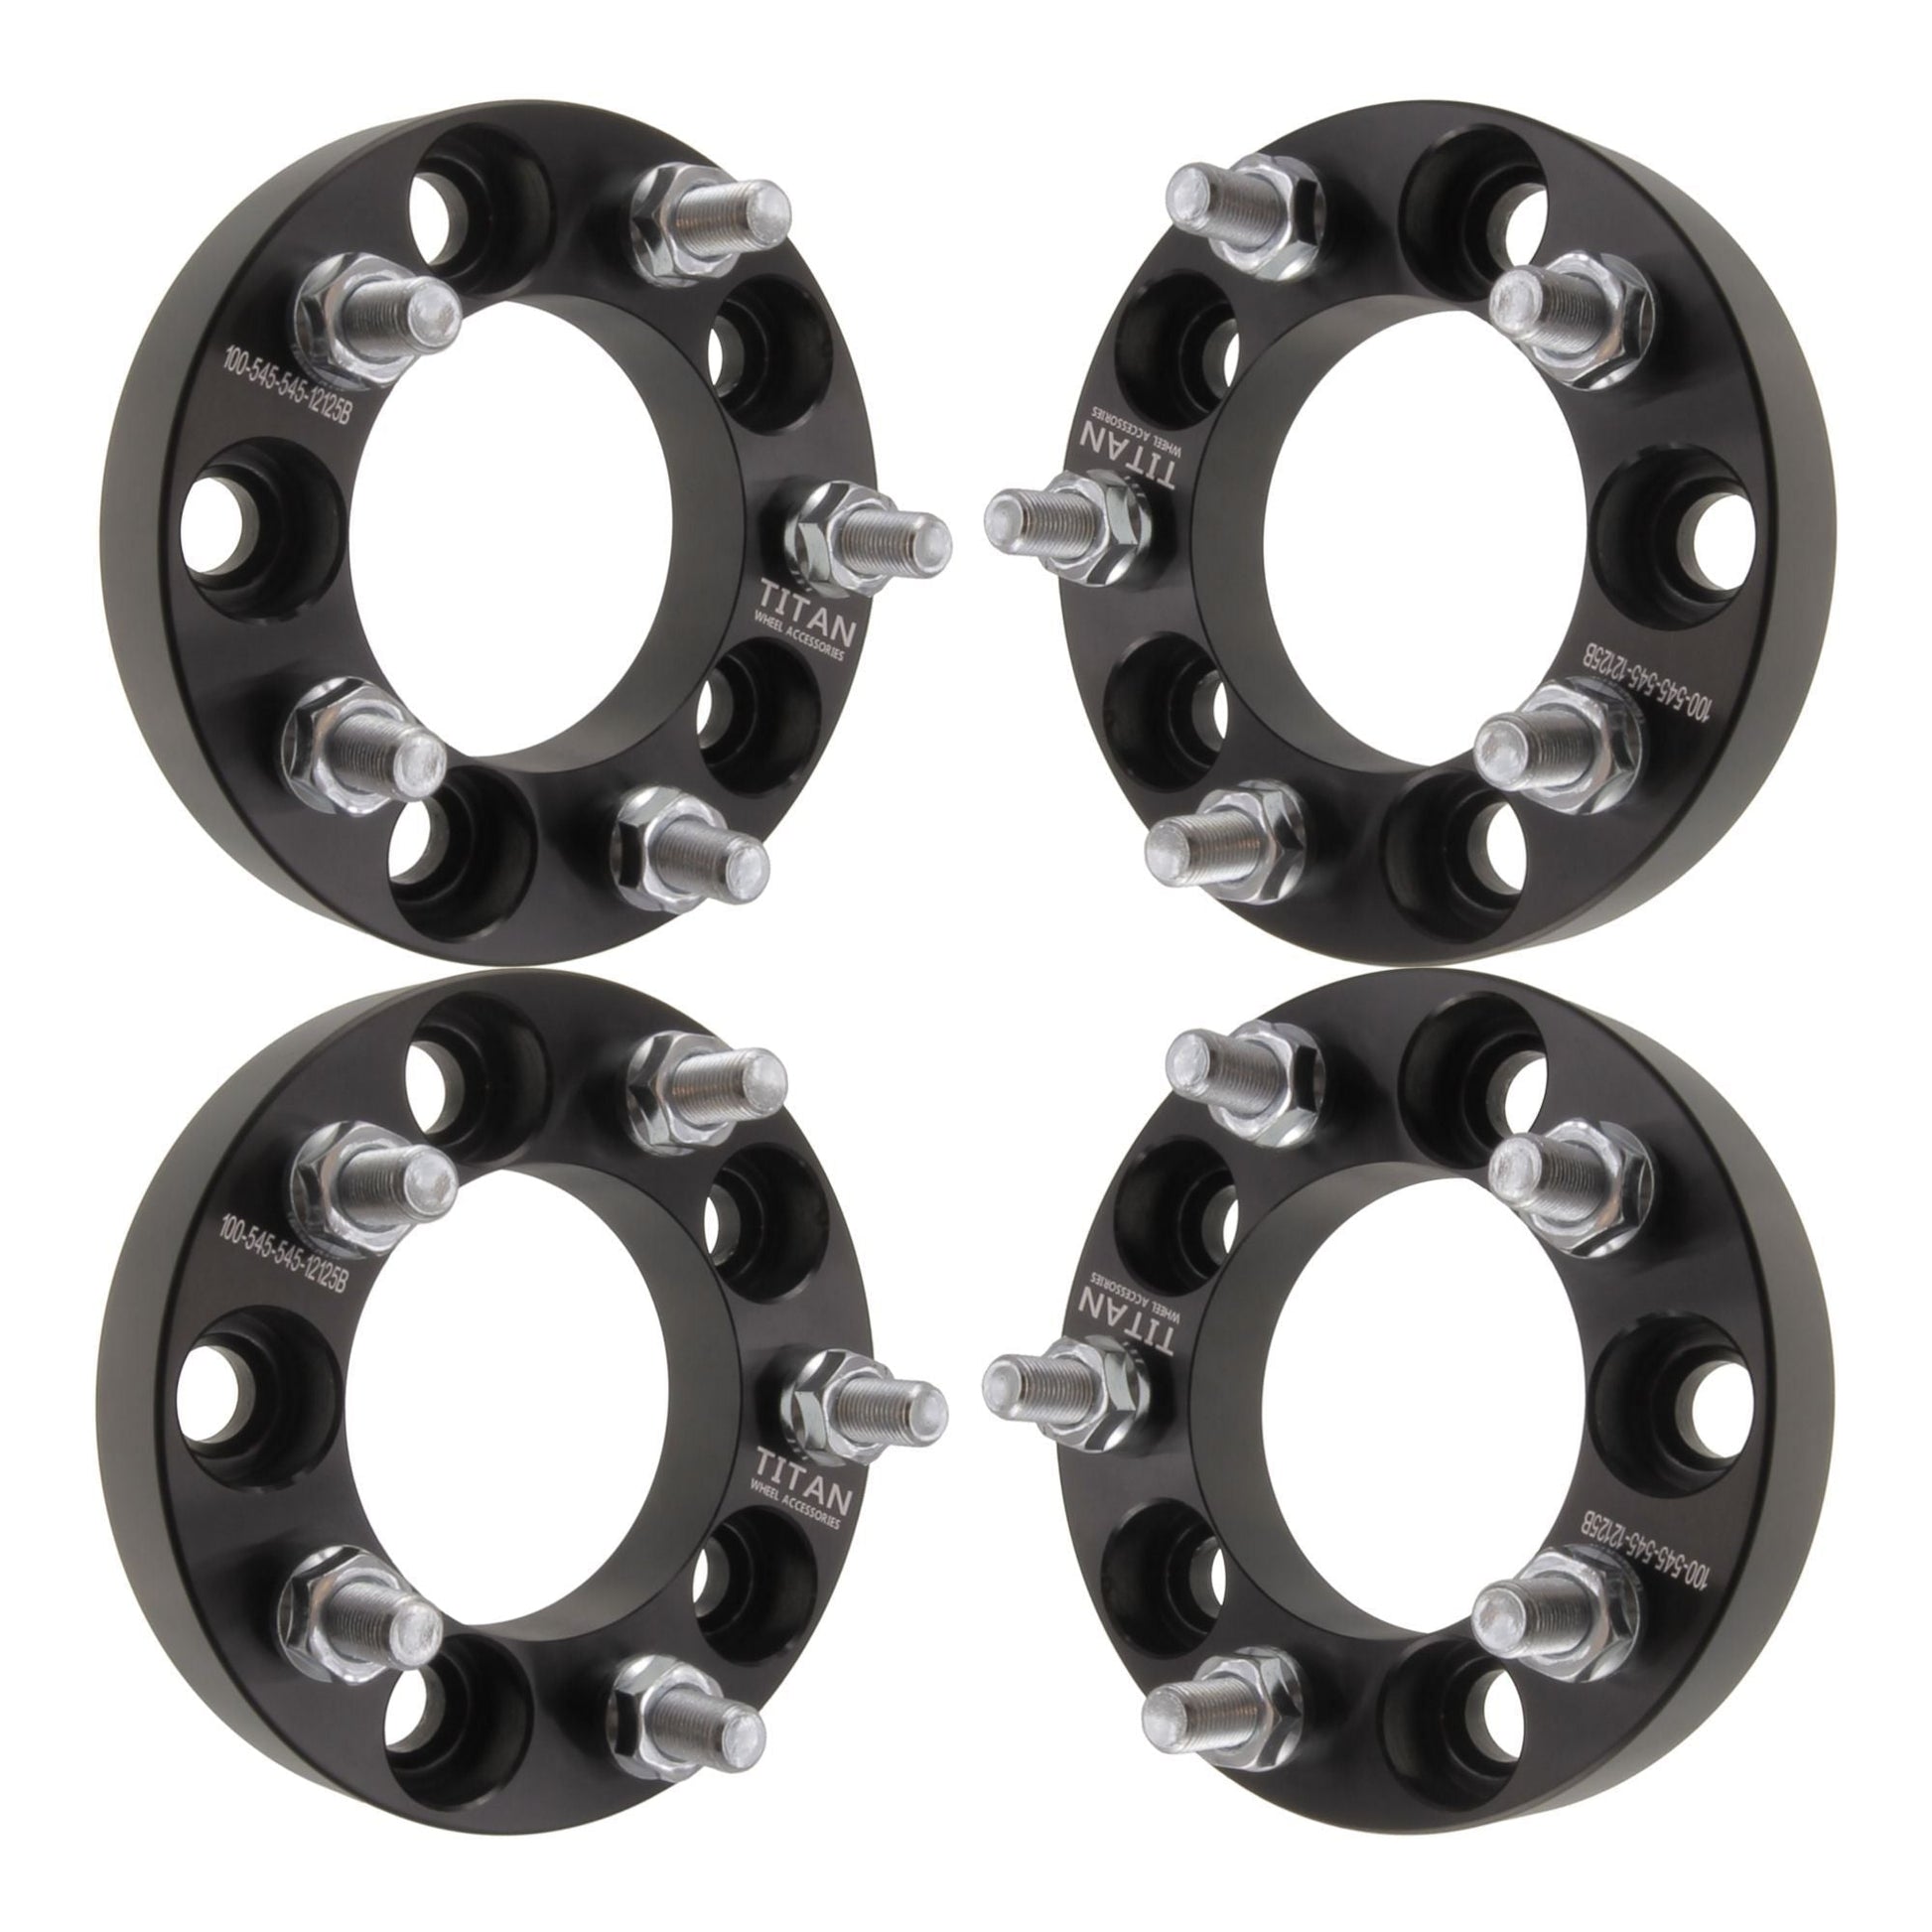 1" (25mm) Titan Wheel Spacers for Wrangler TJ YJ XJ | 5x4.5 | 1/2x20 Studs | Set of 4 | Titan Wheel Accessories